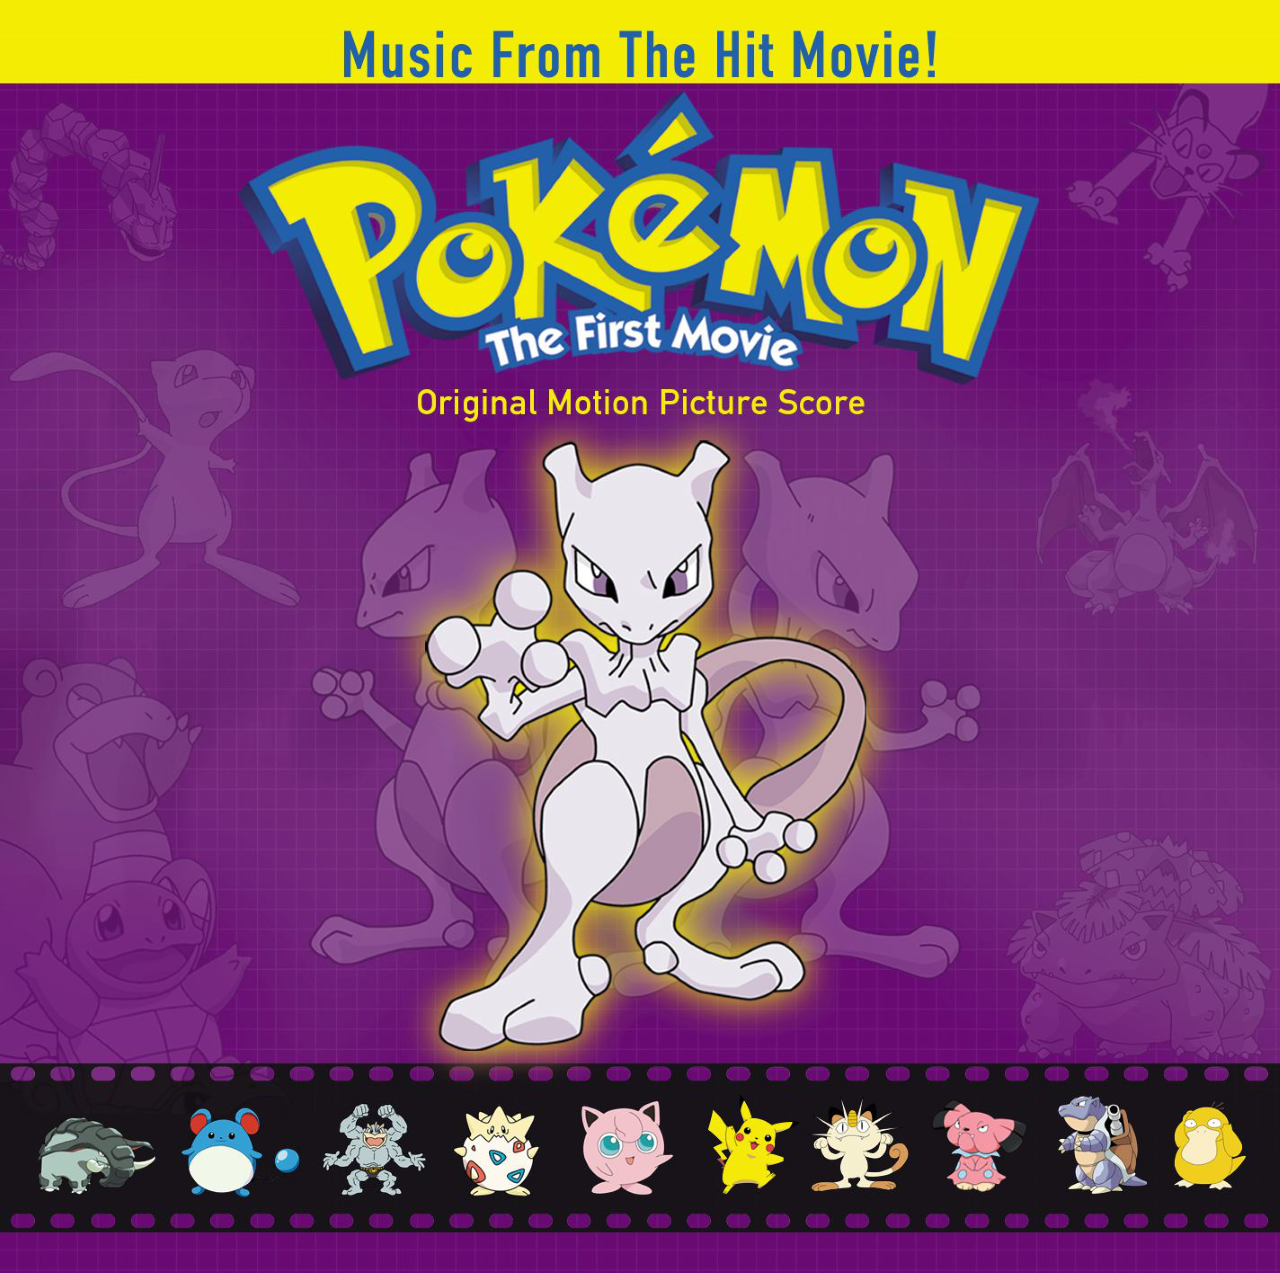 Pokémon the First Movie: Original Motion Picture Score